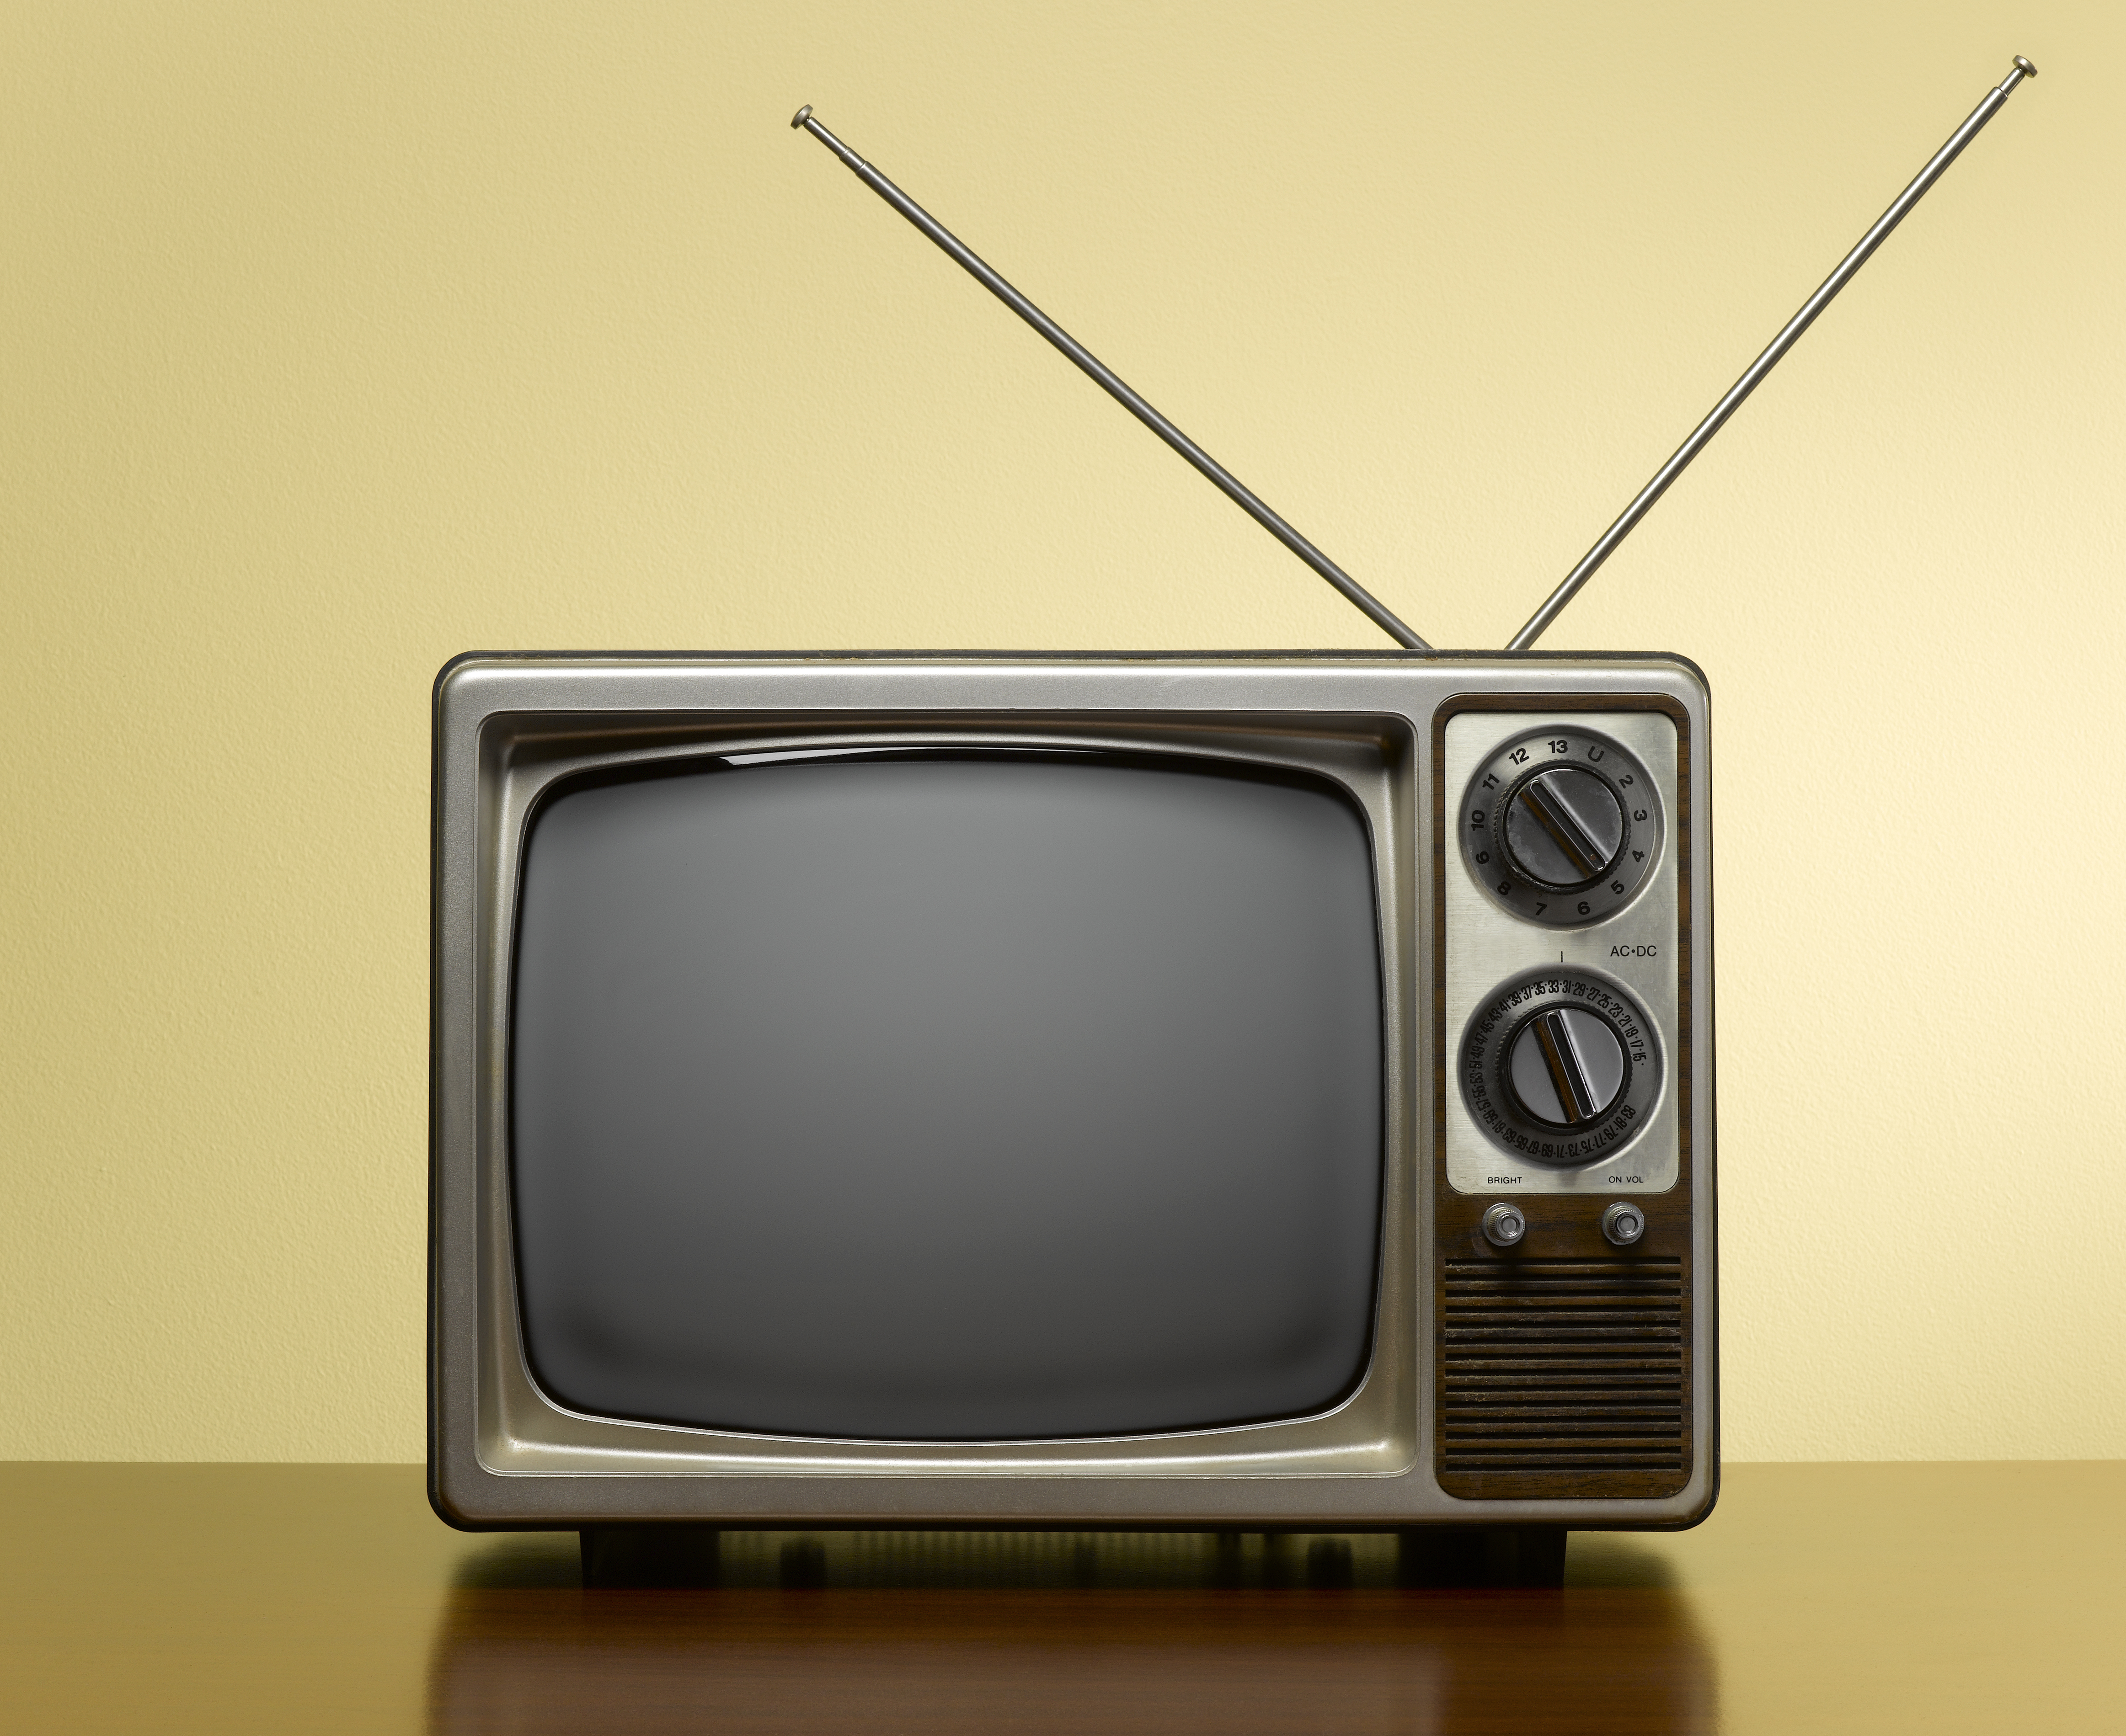 Телевизор 20 минут. Старый телевизор. Старинный телевизор. Старый телевизор с антенной. Ретро телевизор.